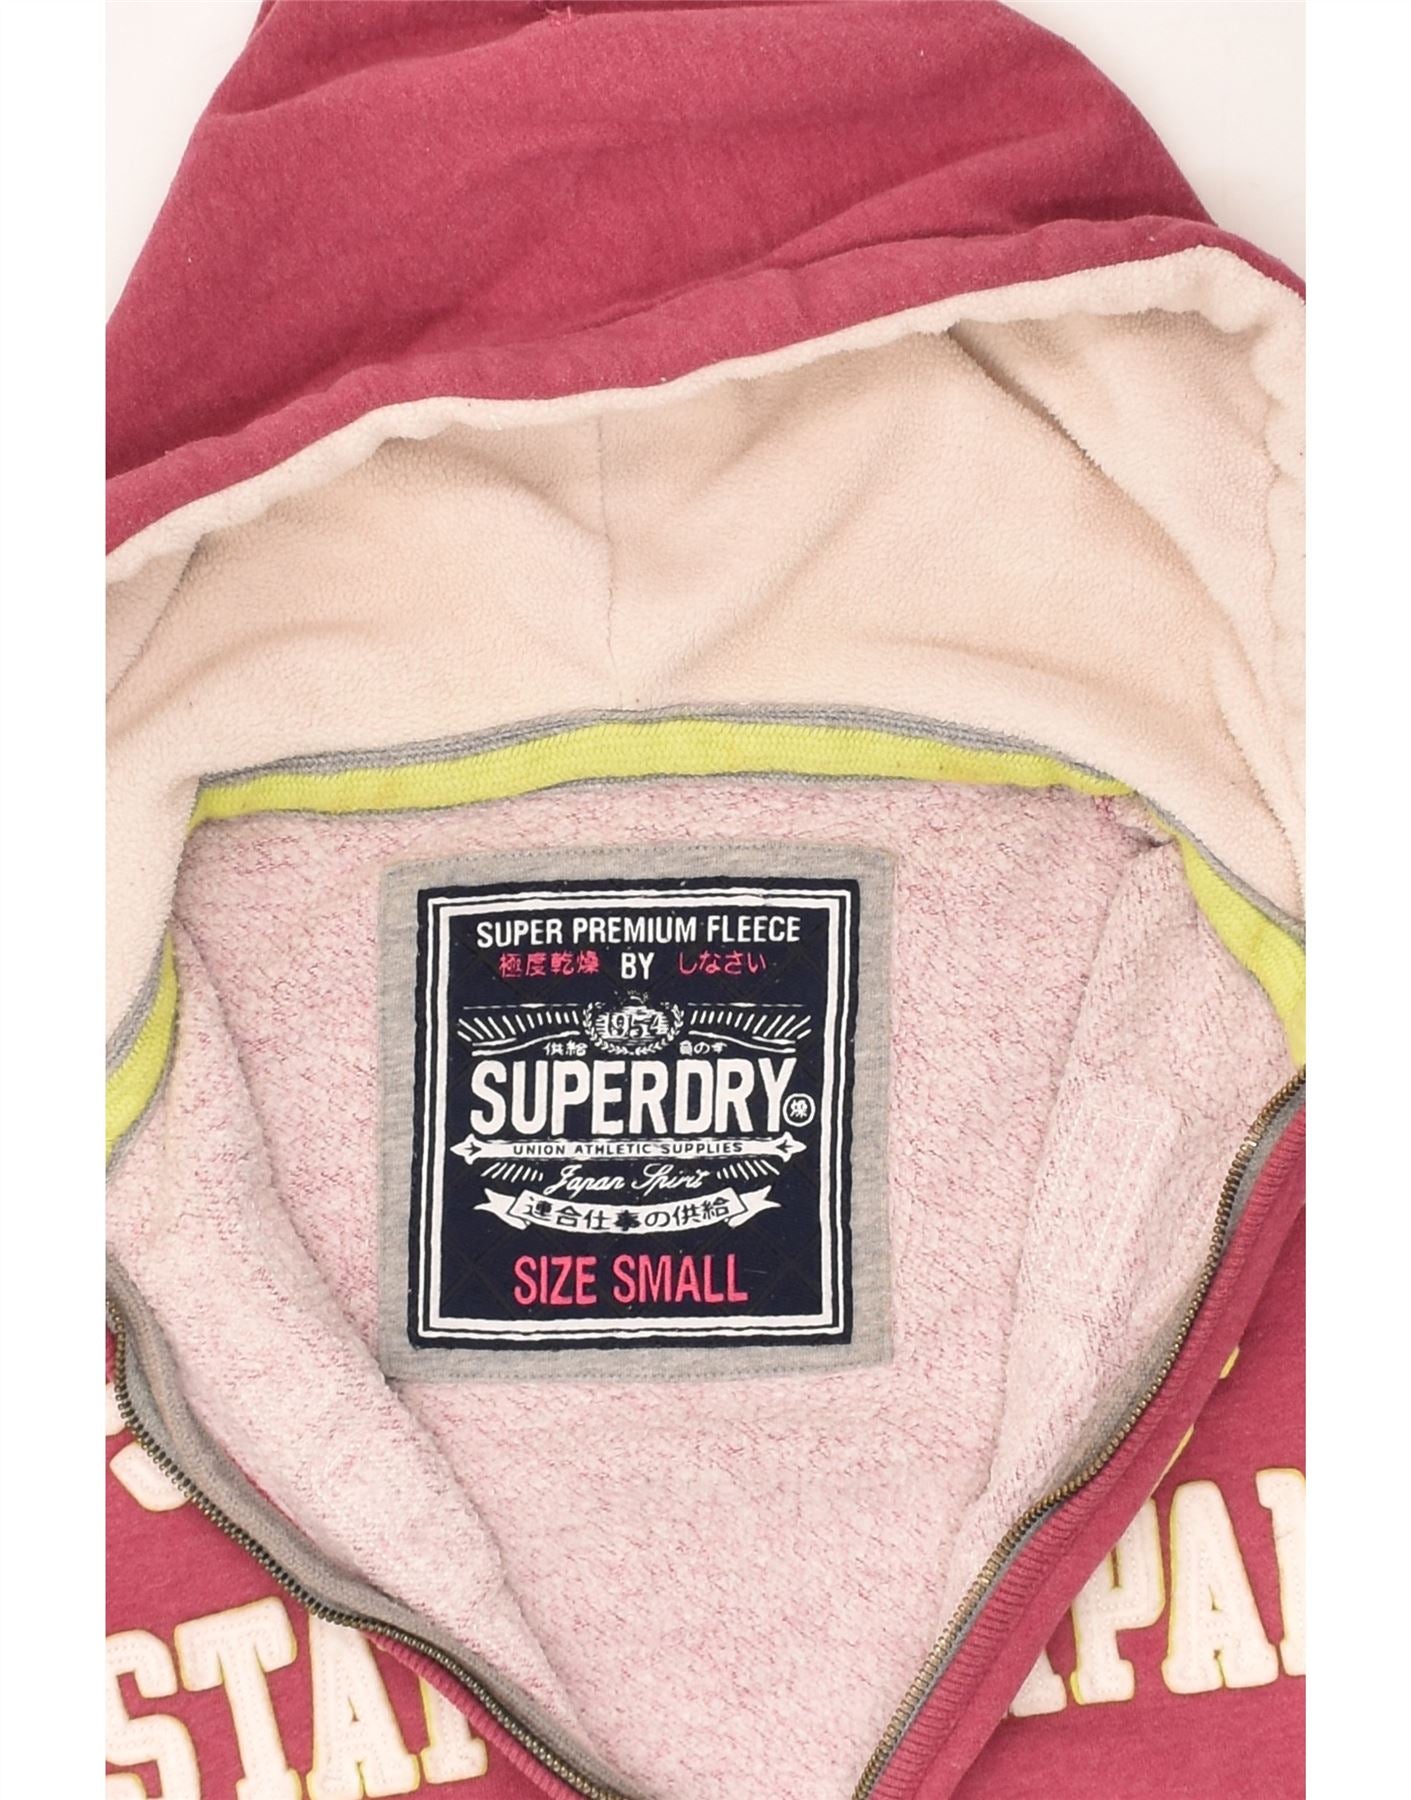 Superdry Japan spirit vintage hoodie sweatshirt pink blue pullover logo  women XS